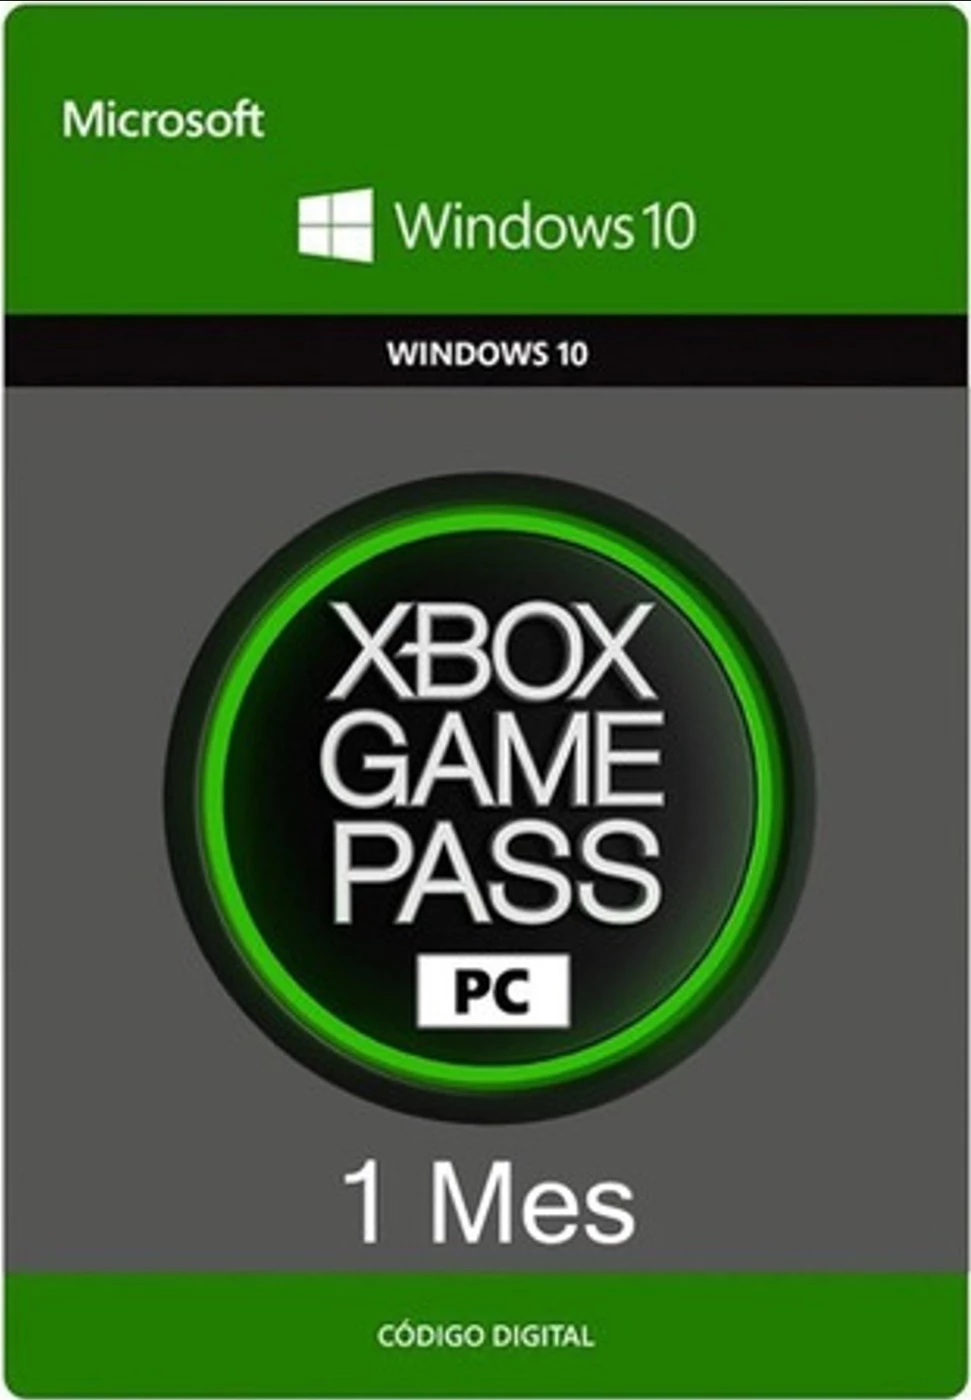 Gift Card Xbox Game Pass Ultimate 1 Mês Cód 25 Dígitos - Gift